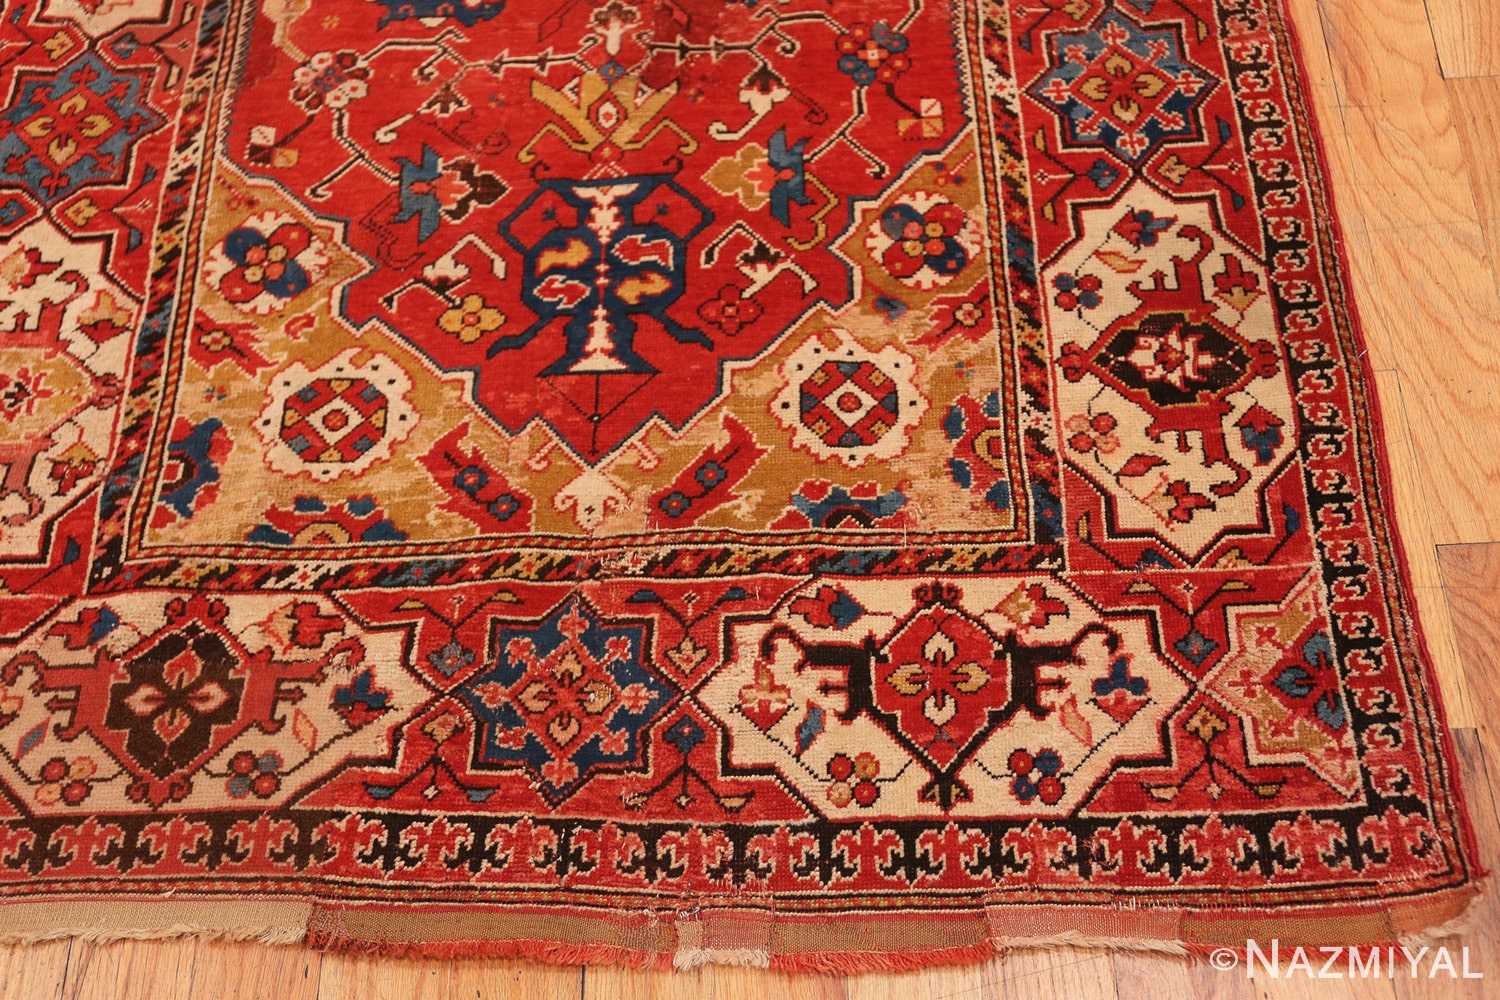 Corner Antique 17th century Transylvanian Turkish rug 70178 by Nazmiyal